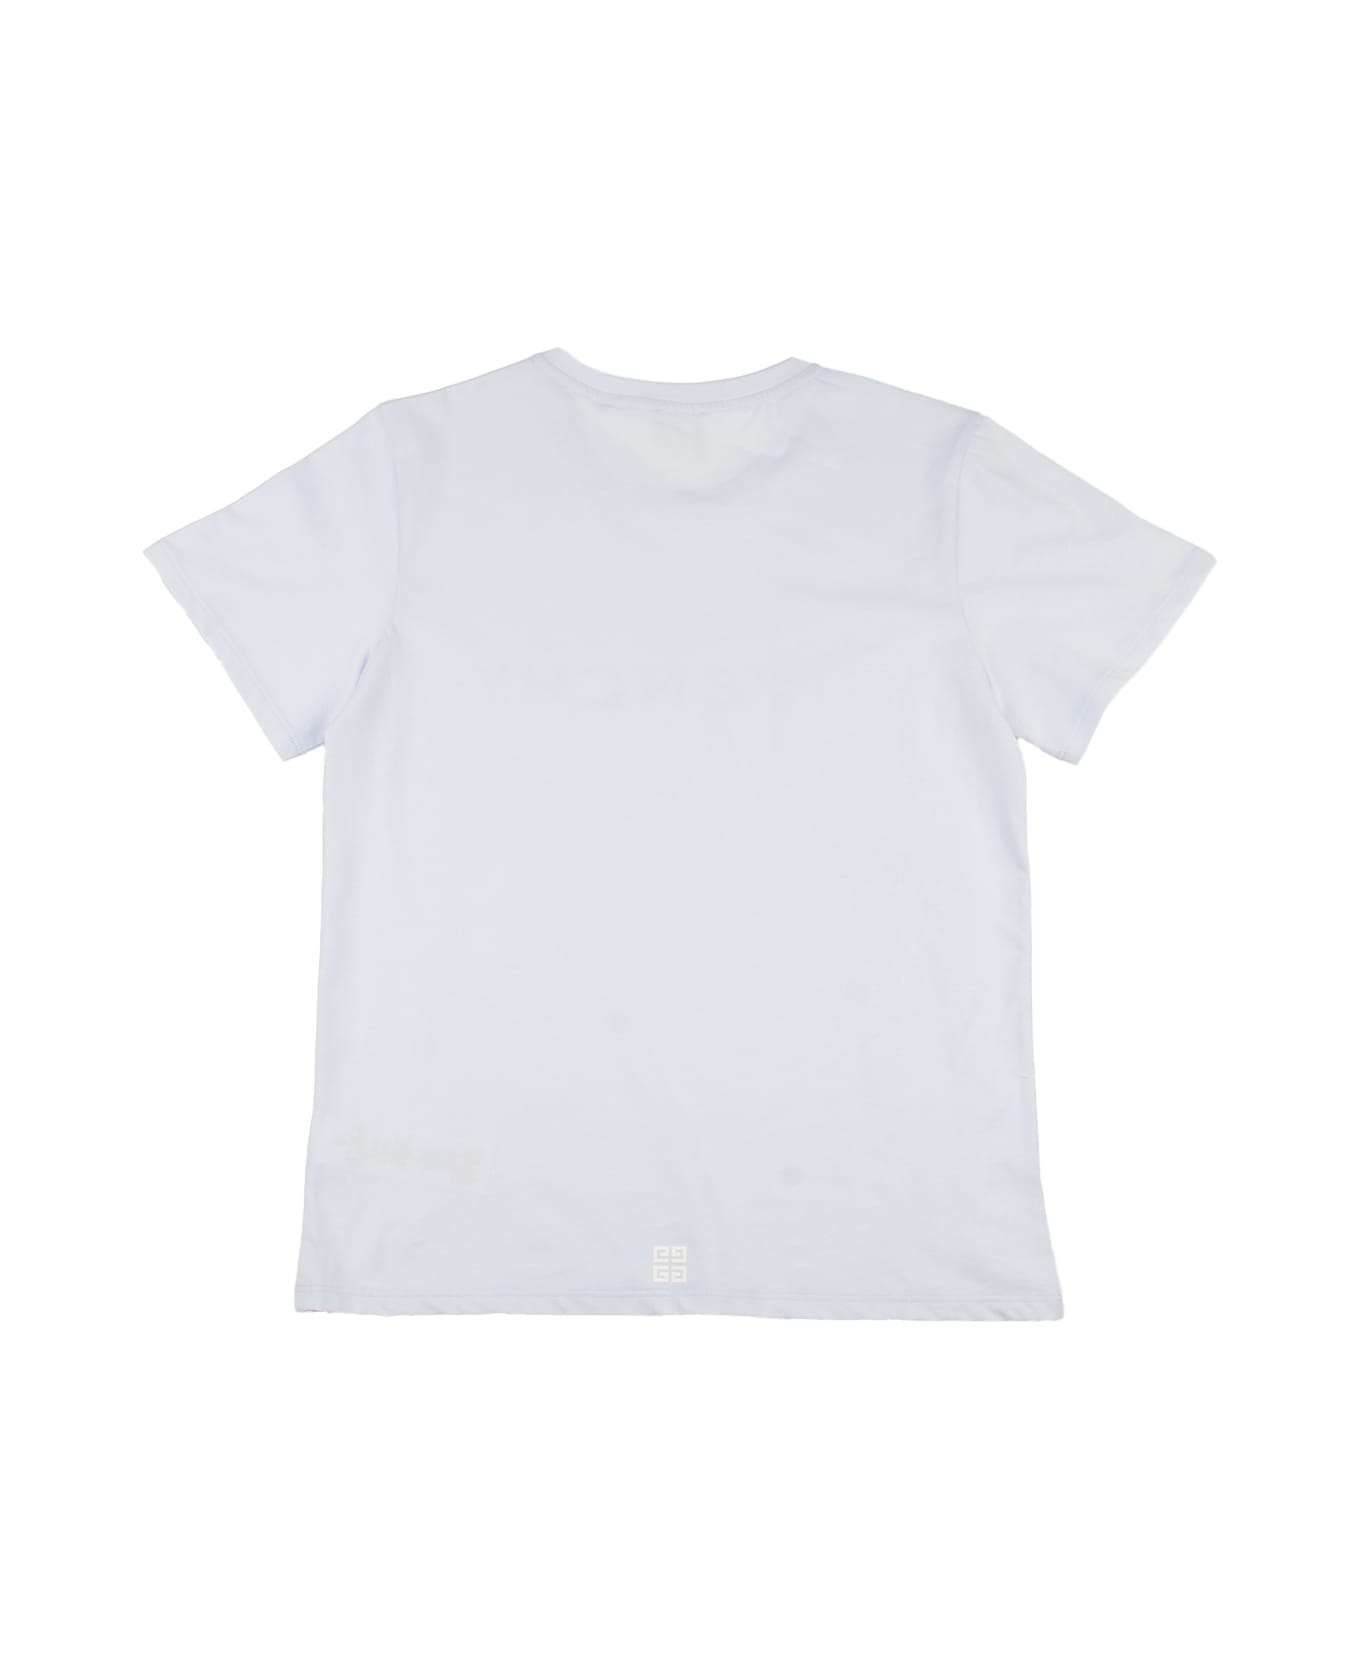 Givenchy Logo Print Regular T-shirt - Blu Cielo